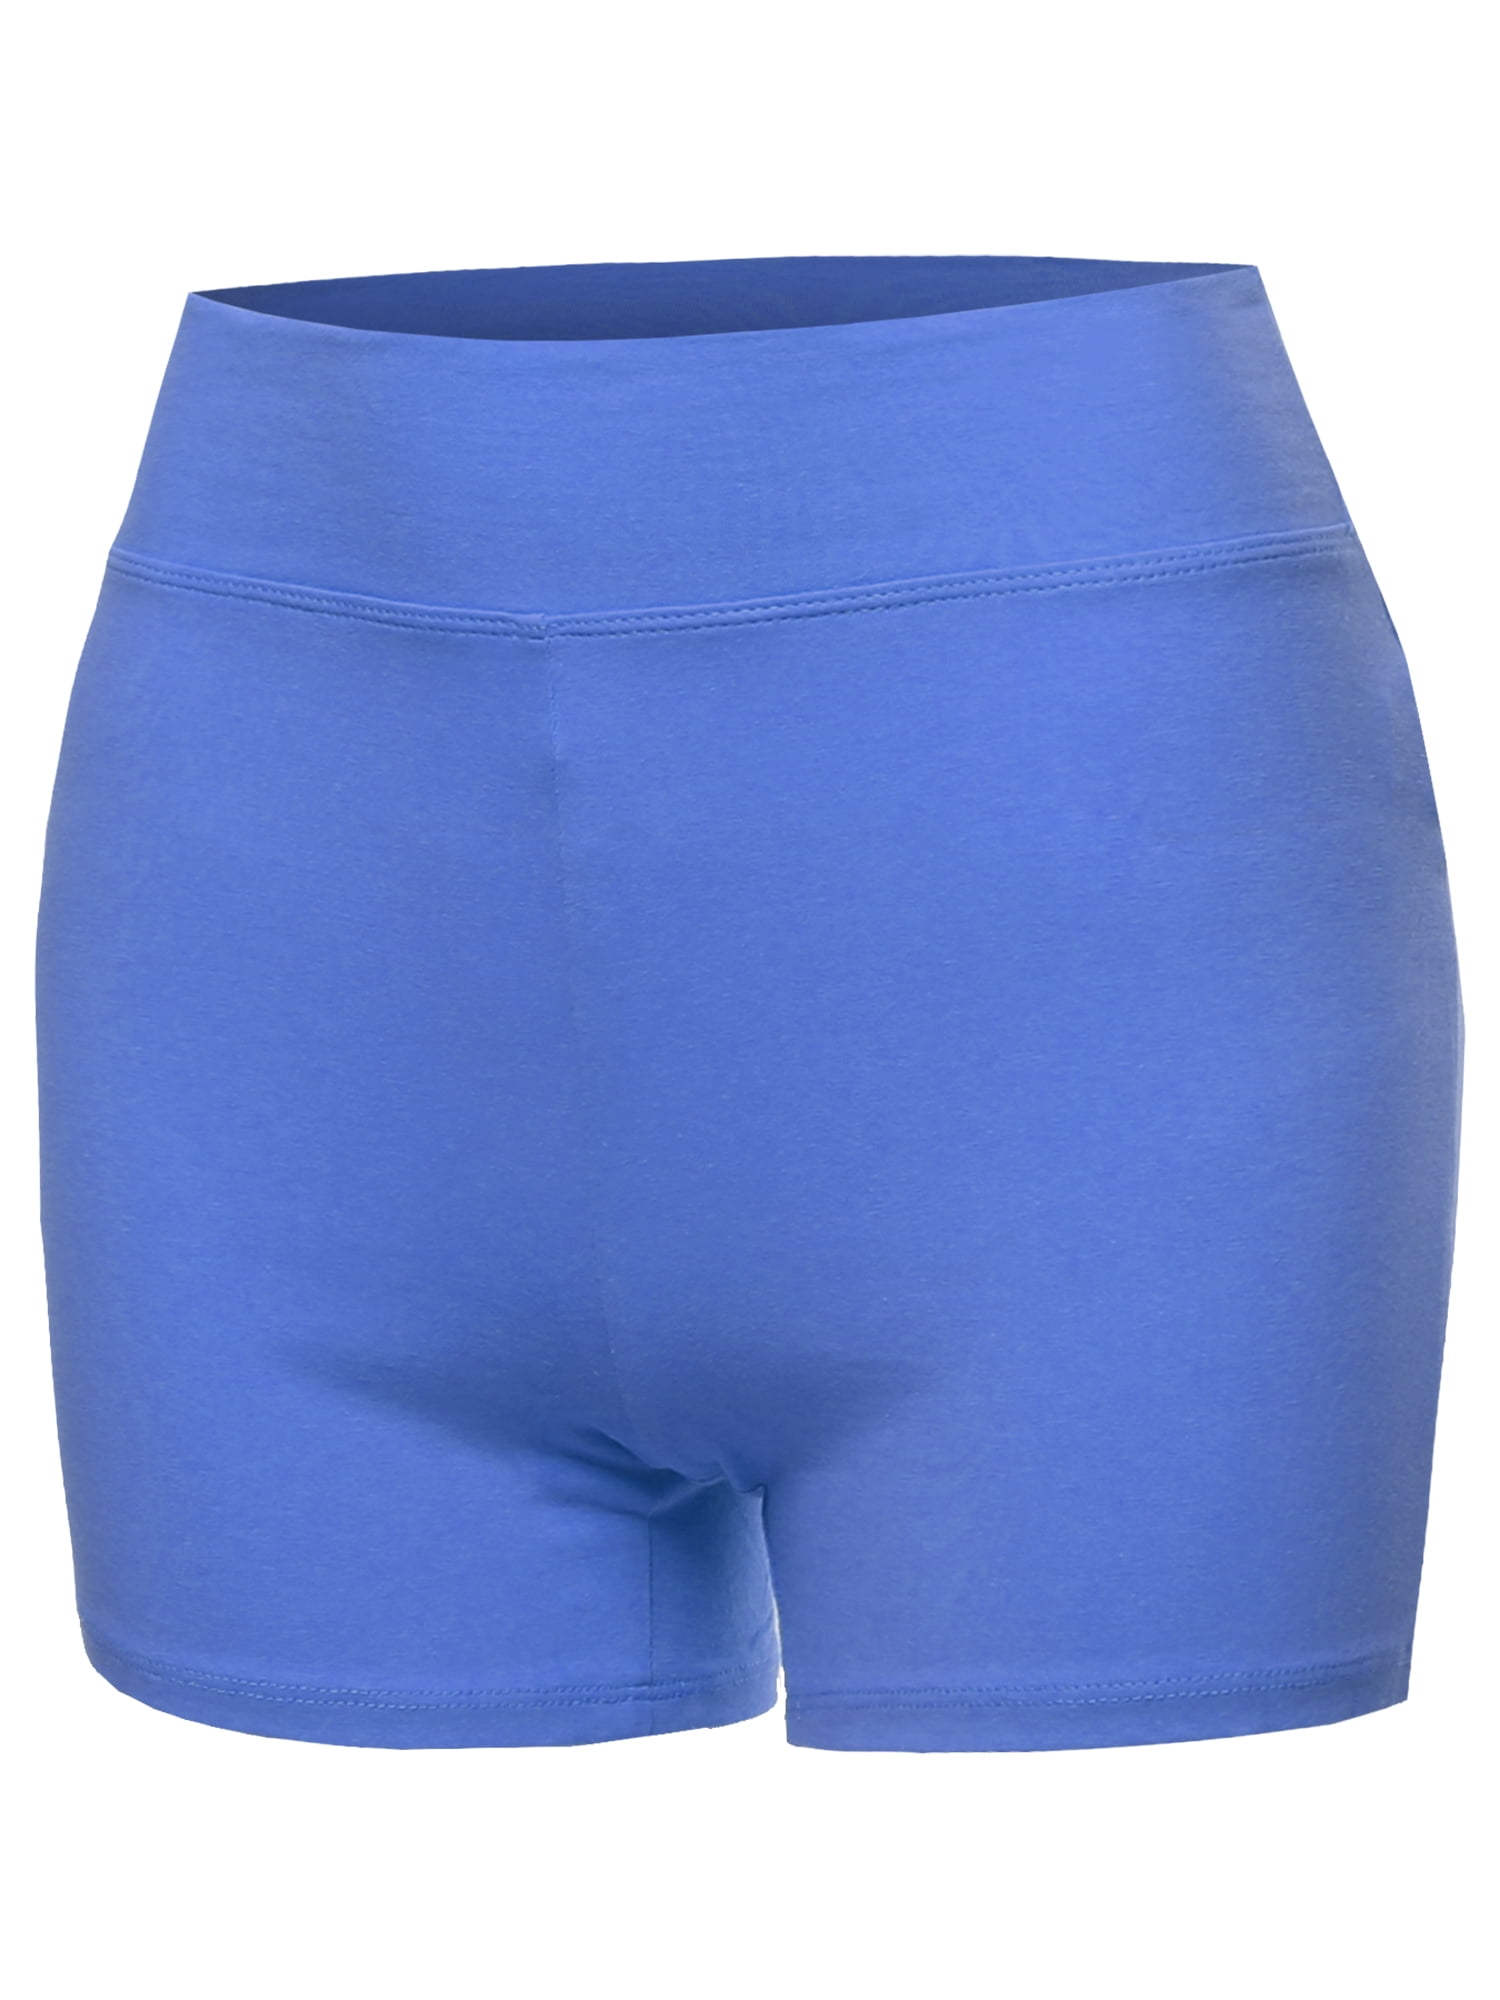 A2Y Women's Basic Solid Premium Cotton High Rise Bike Shorts Blue Mist ...